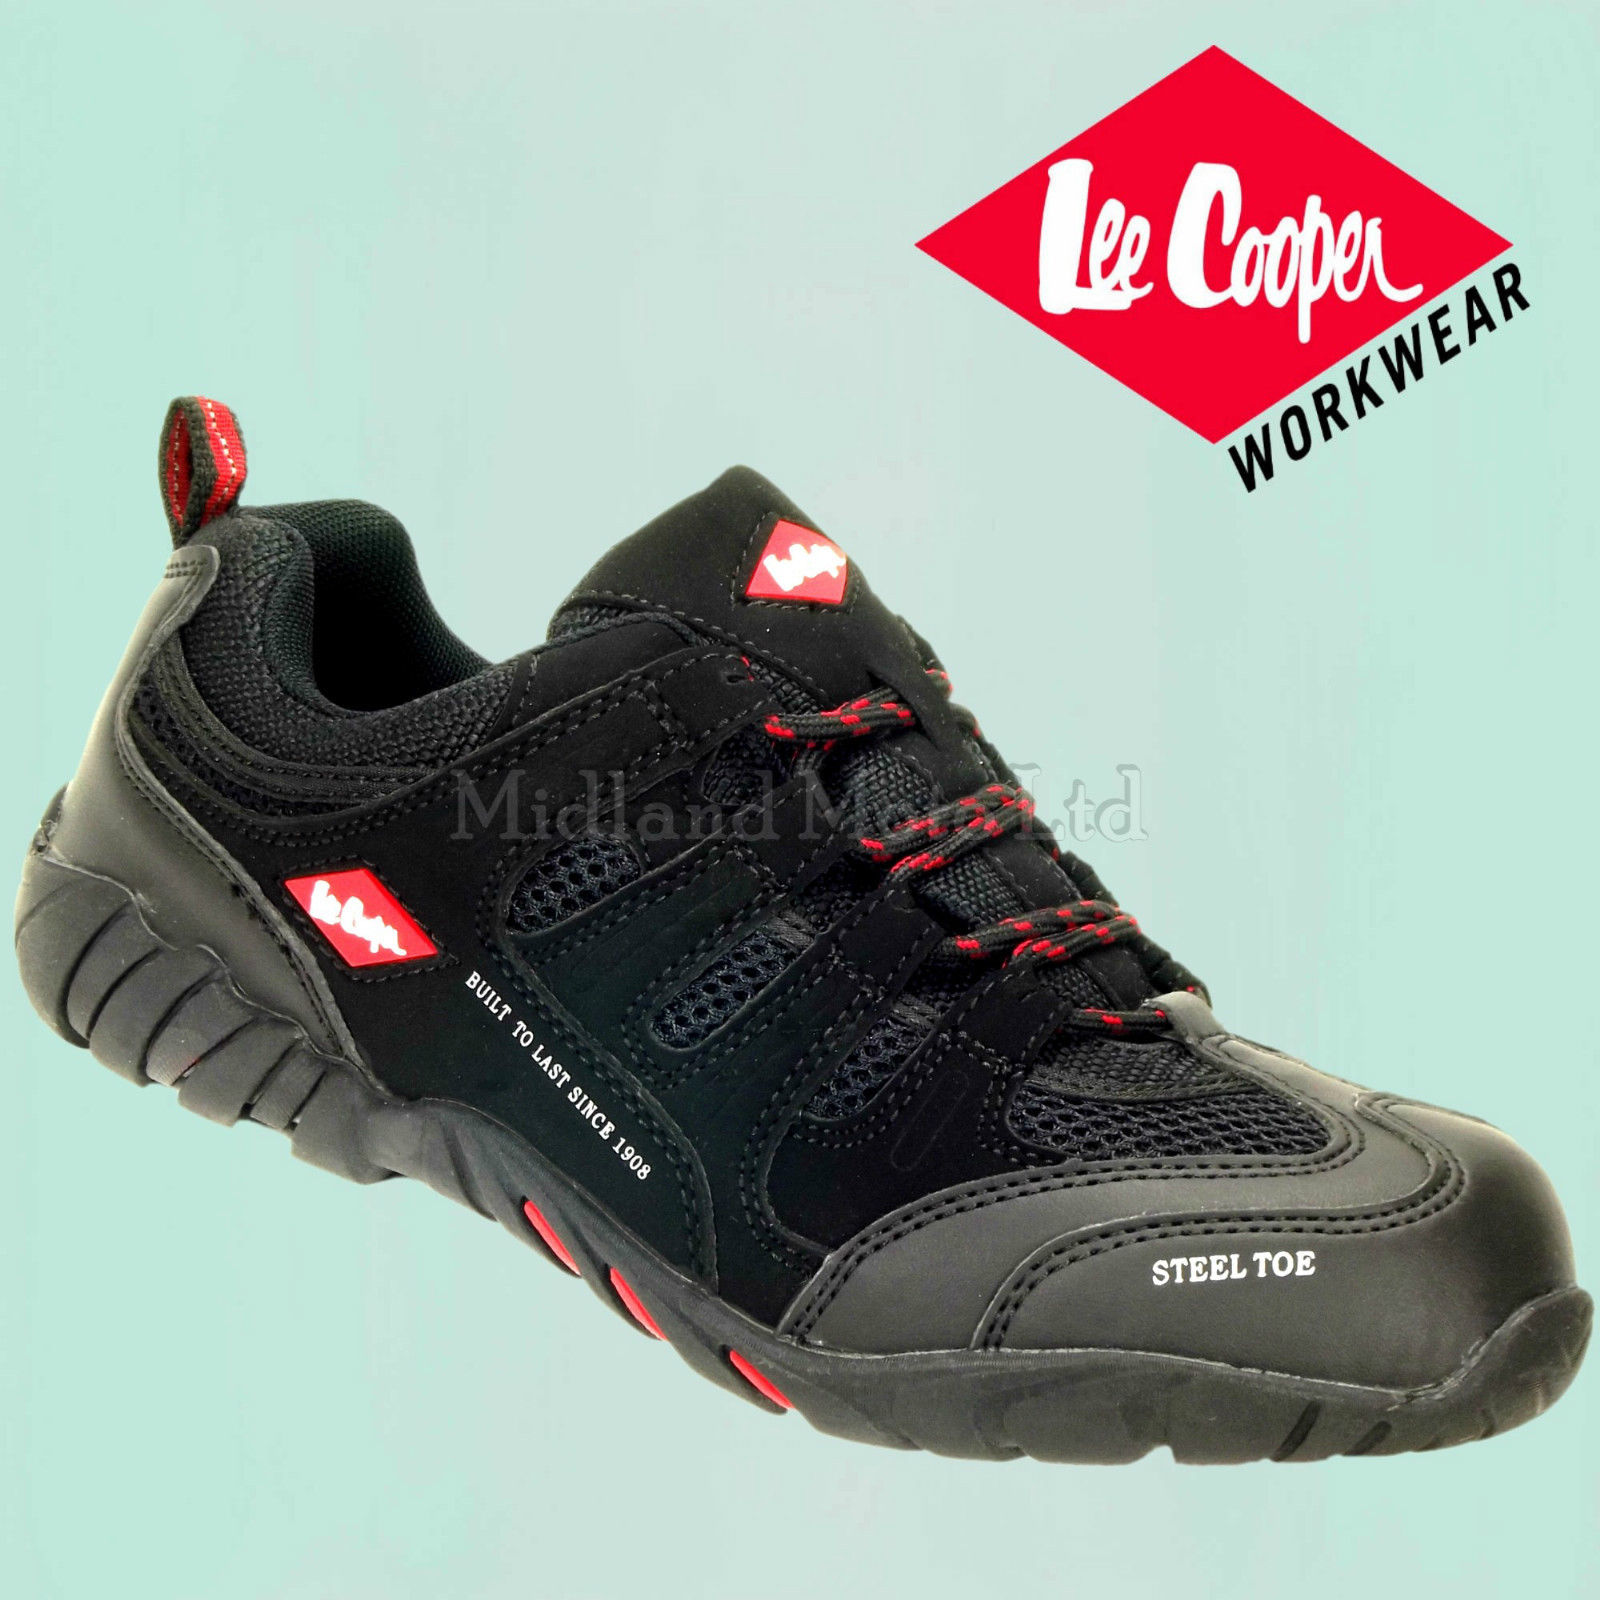 Lee Cooper Steel Toe Cap Safety Shoe. The Best Looking Ladies Work Trainer. boot